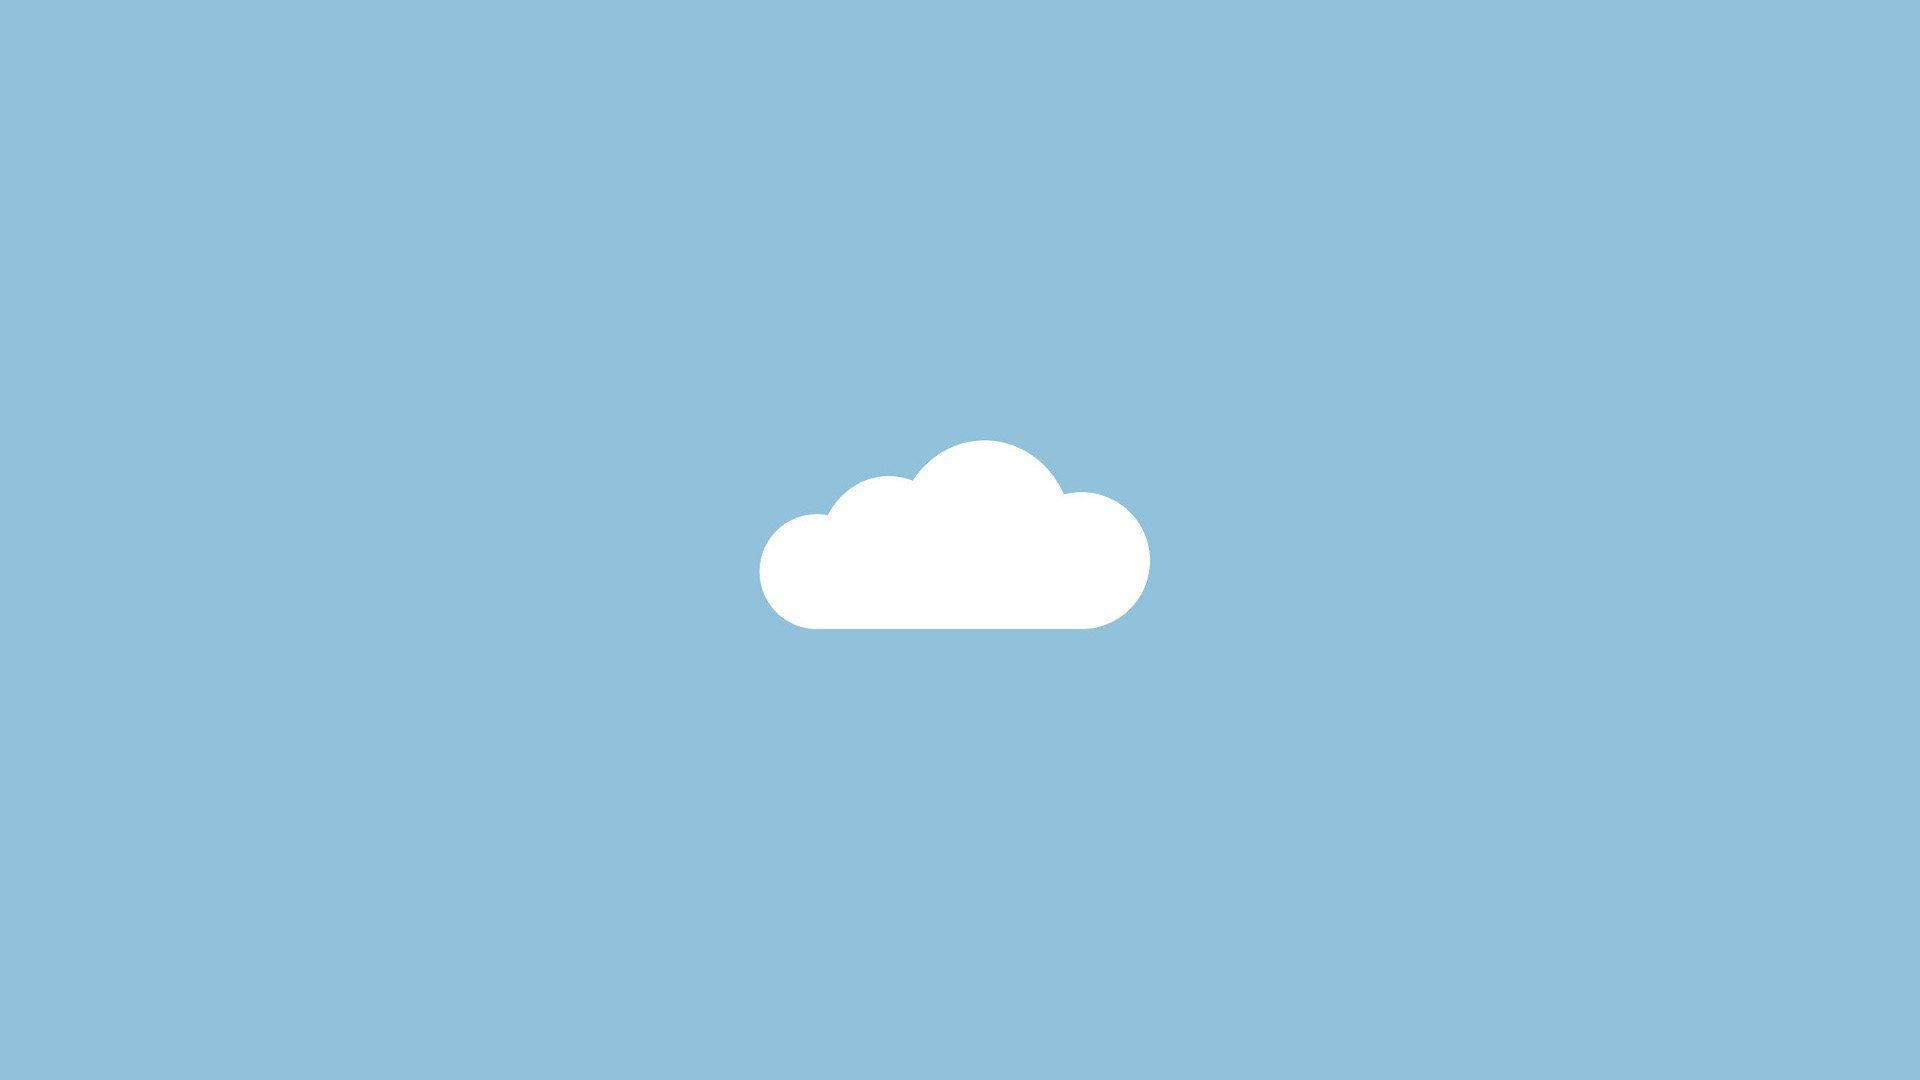 Simple Desktop Cloud Background